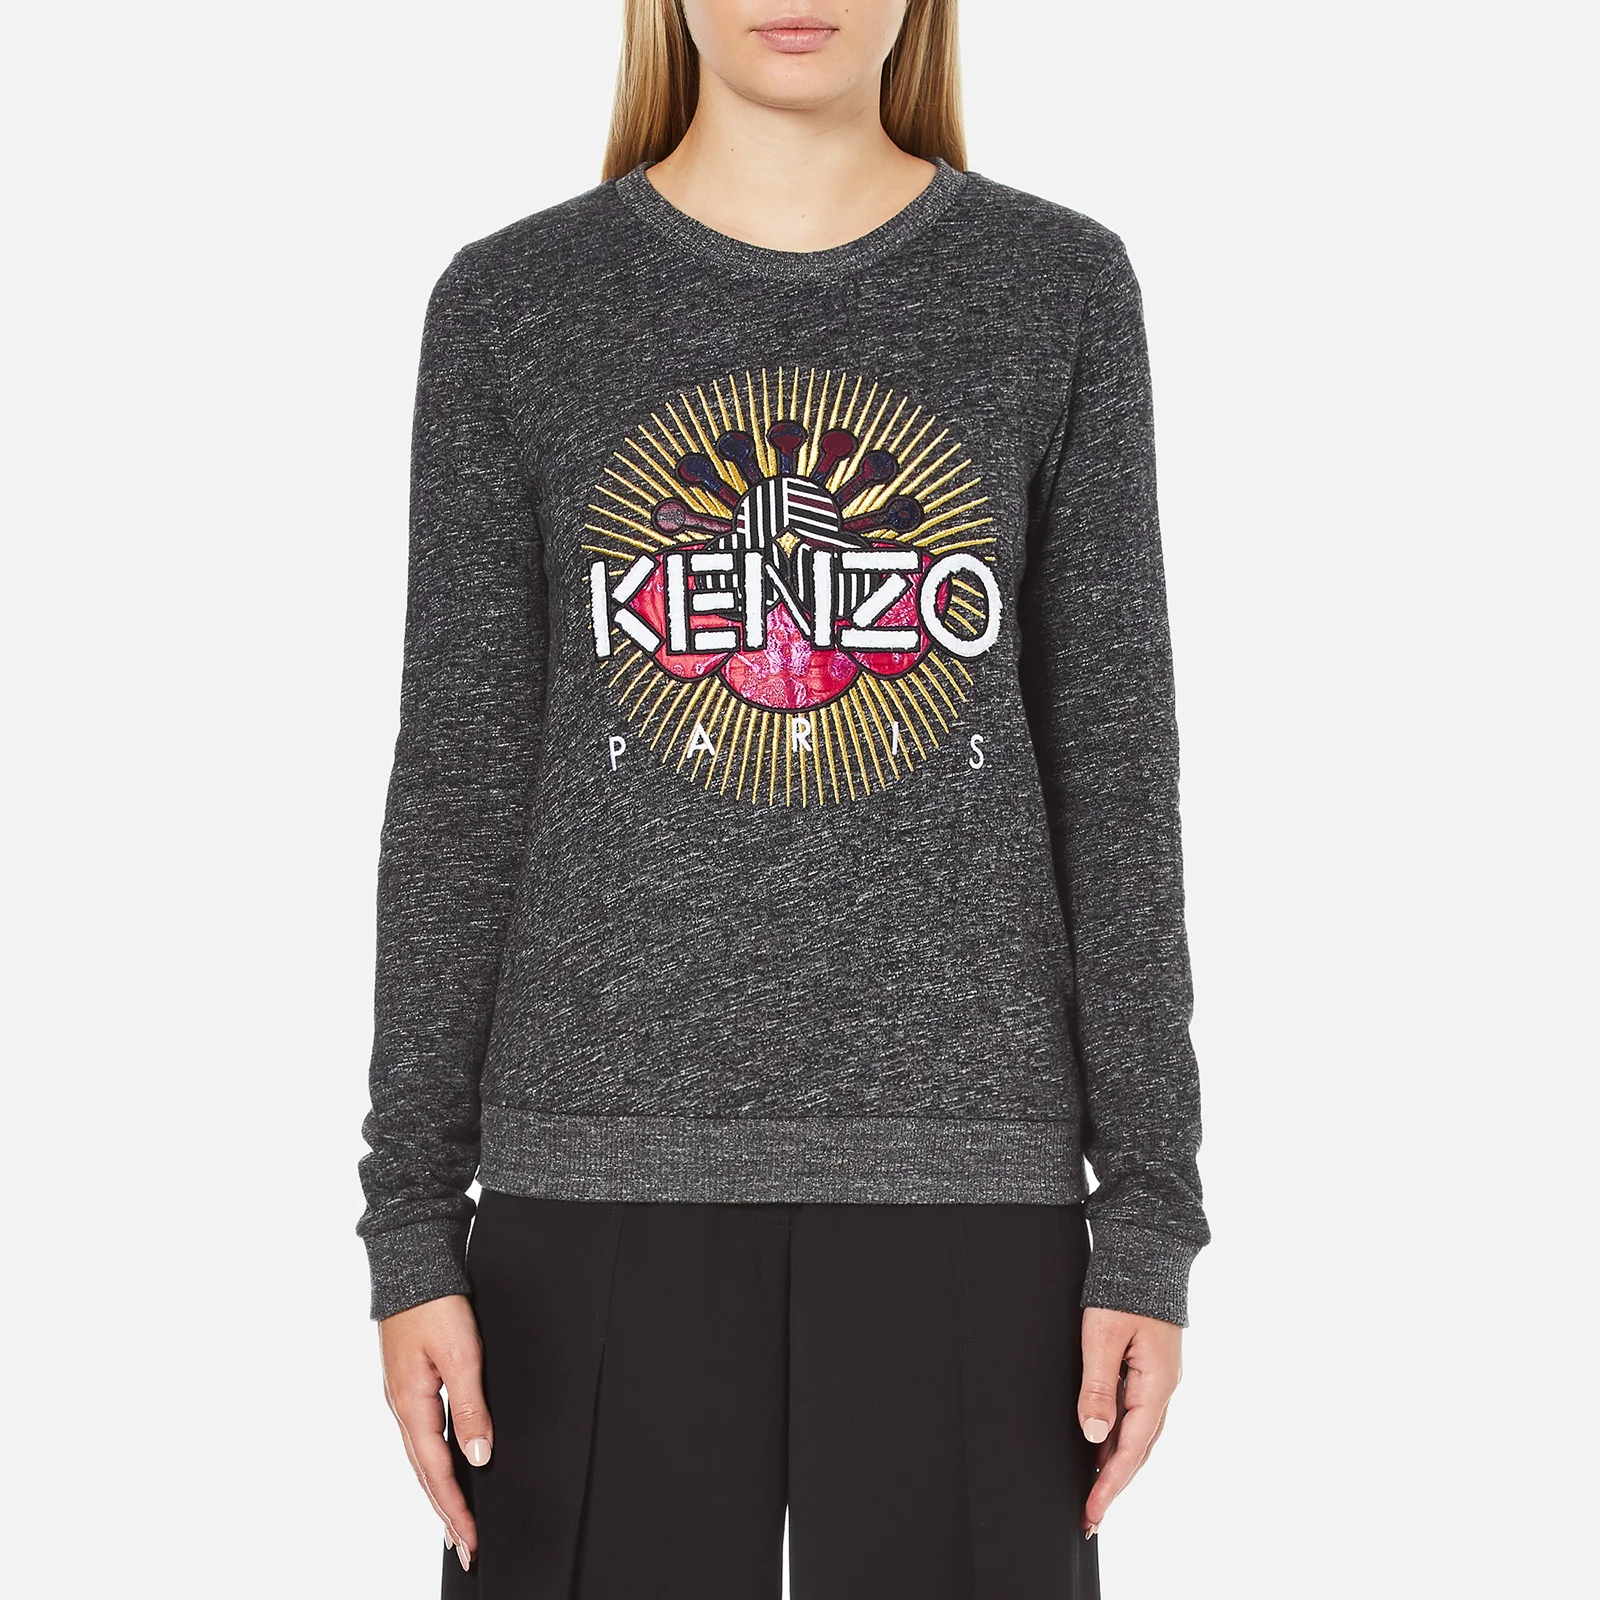 KENZO Women's Tenamie Flower Sweatshirt - Dark Grey Image 1